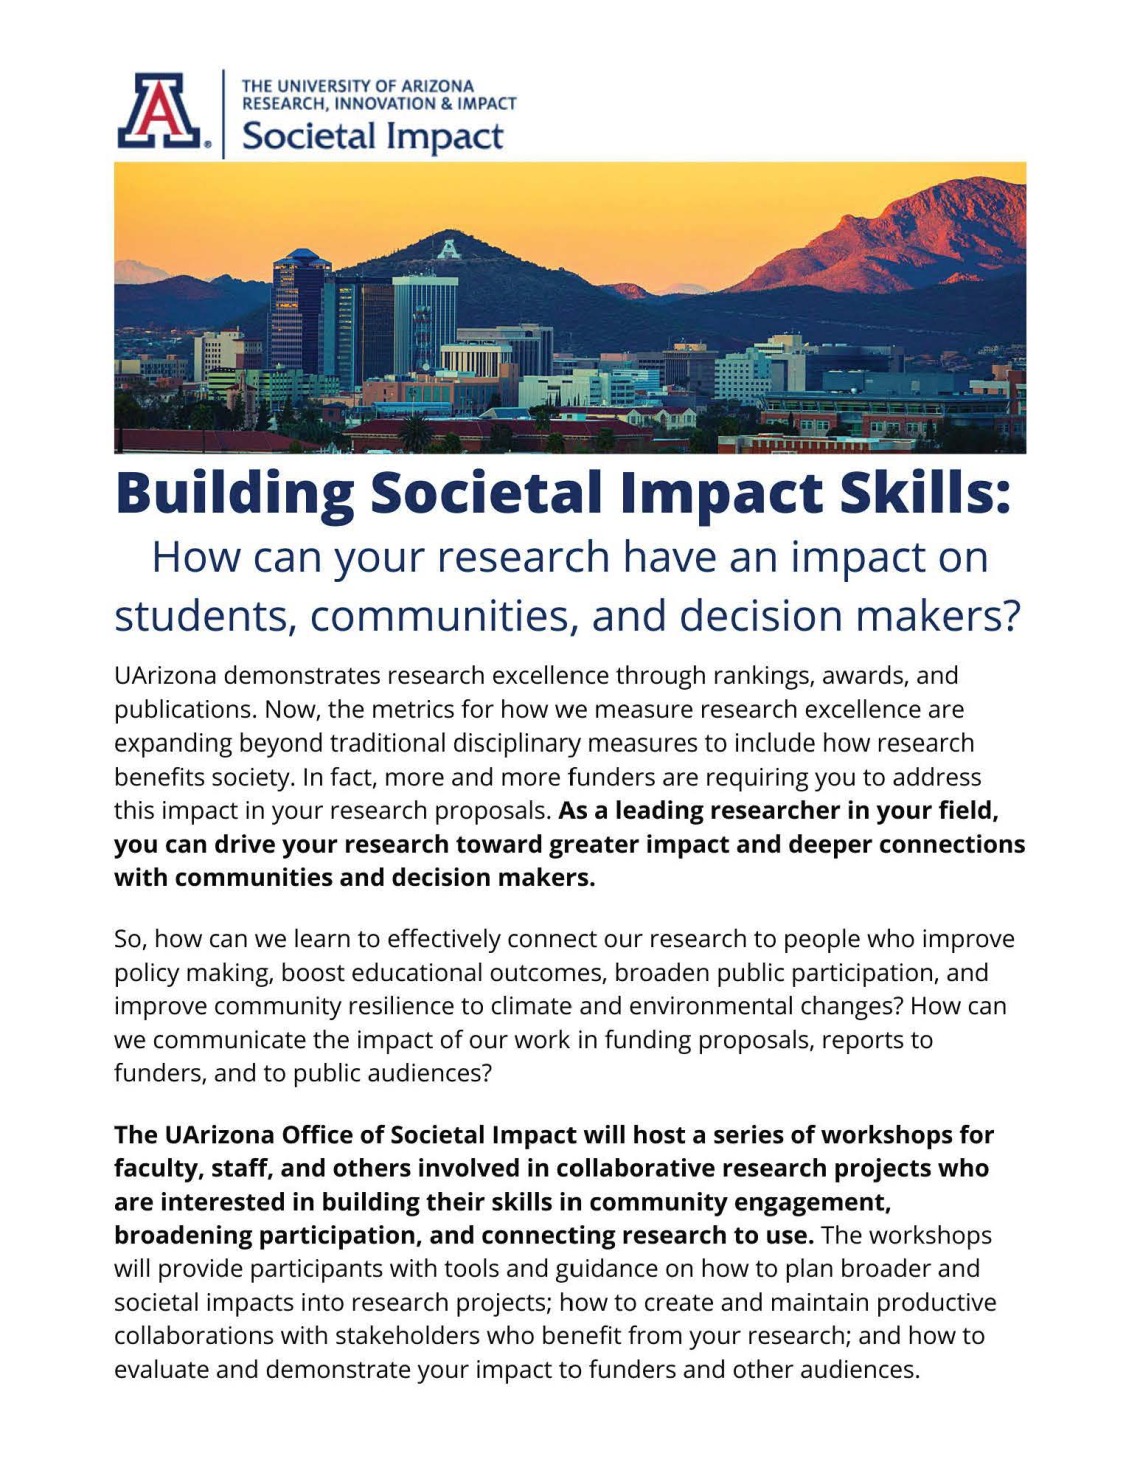 Building Societal Impact Skills info flyer 1 of 2